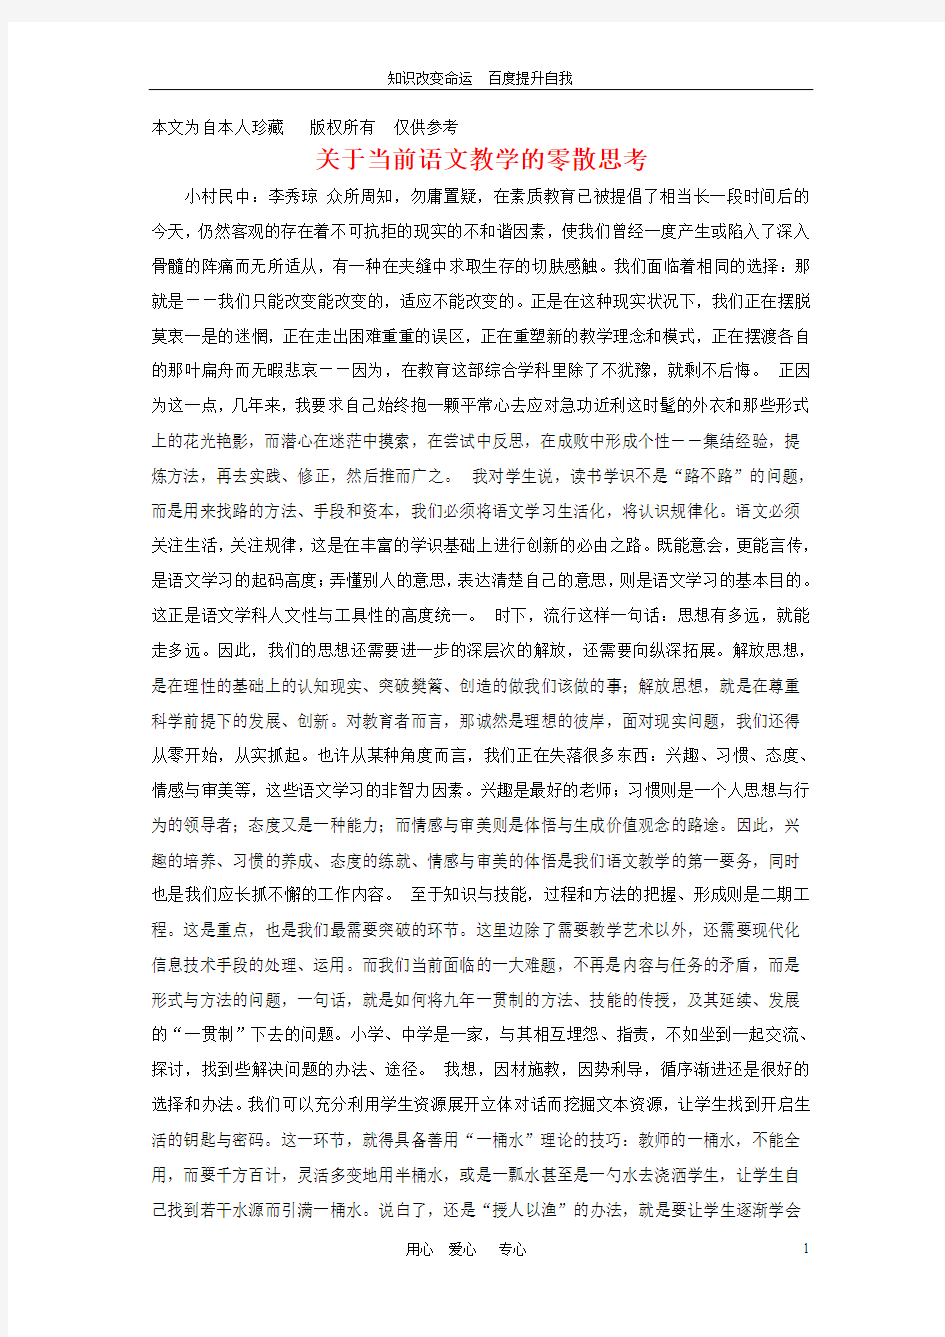 (no.1)初中语文教学论文：关于当前语文教学的零散思考